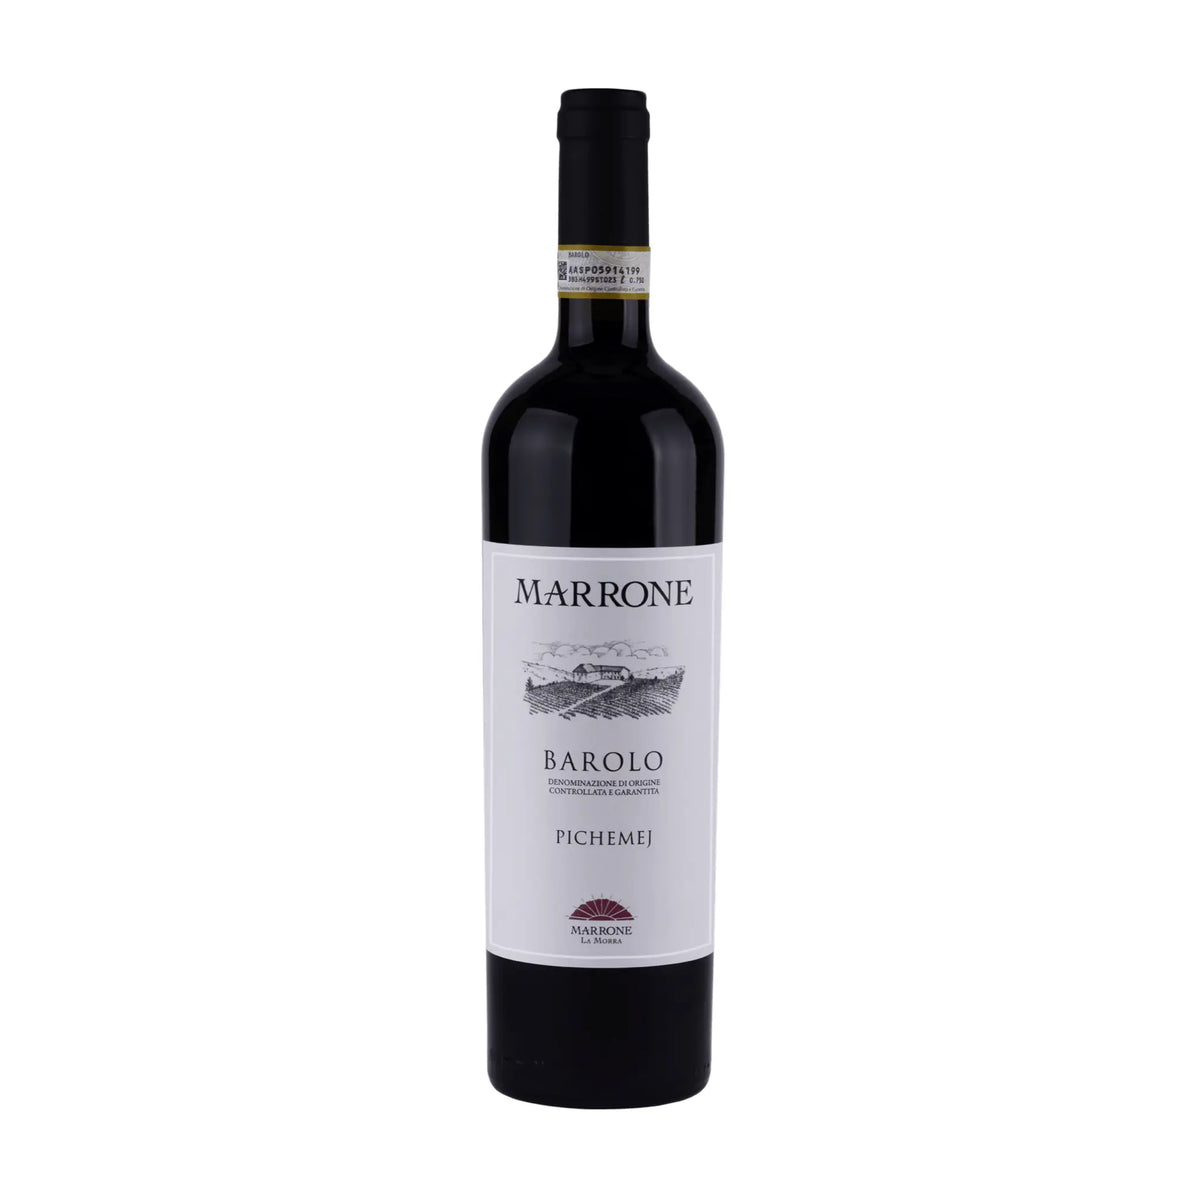 Marrone-Rotwein-Nebbiolo-Piemont-Italien-Pichemej Barolo DOCG-WINECOM